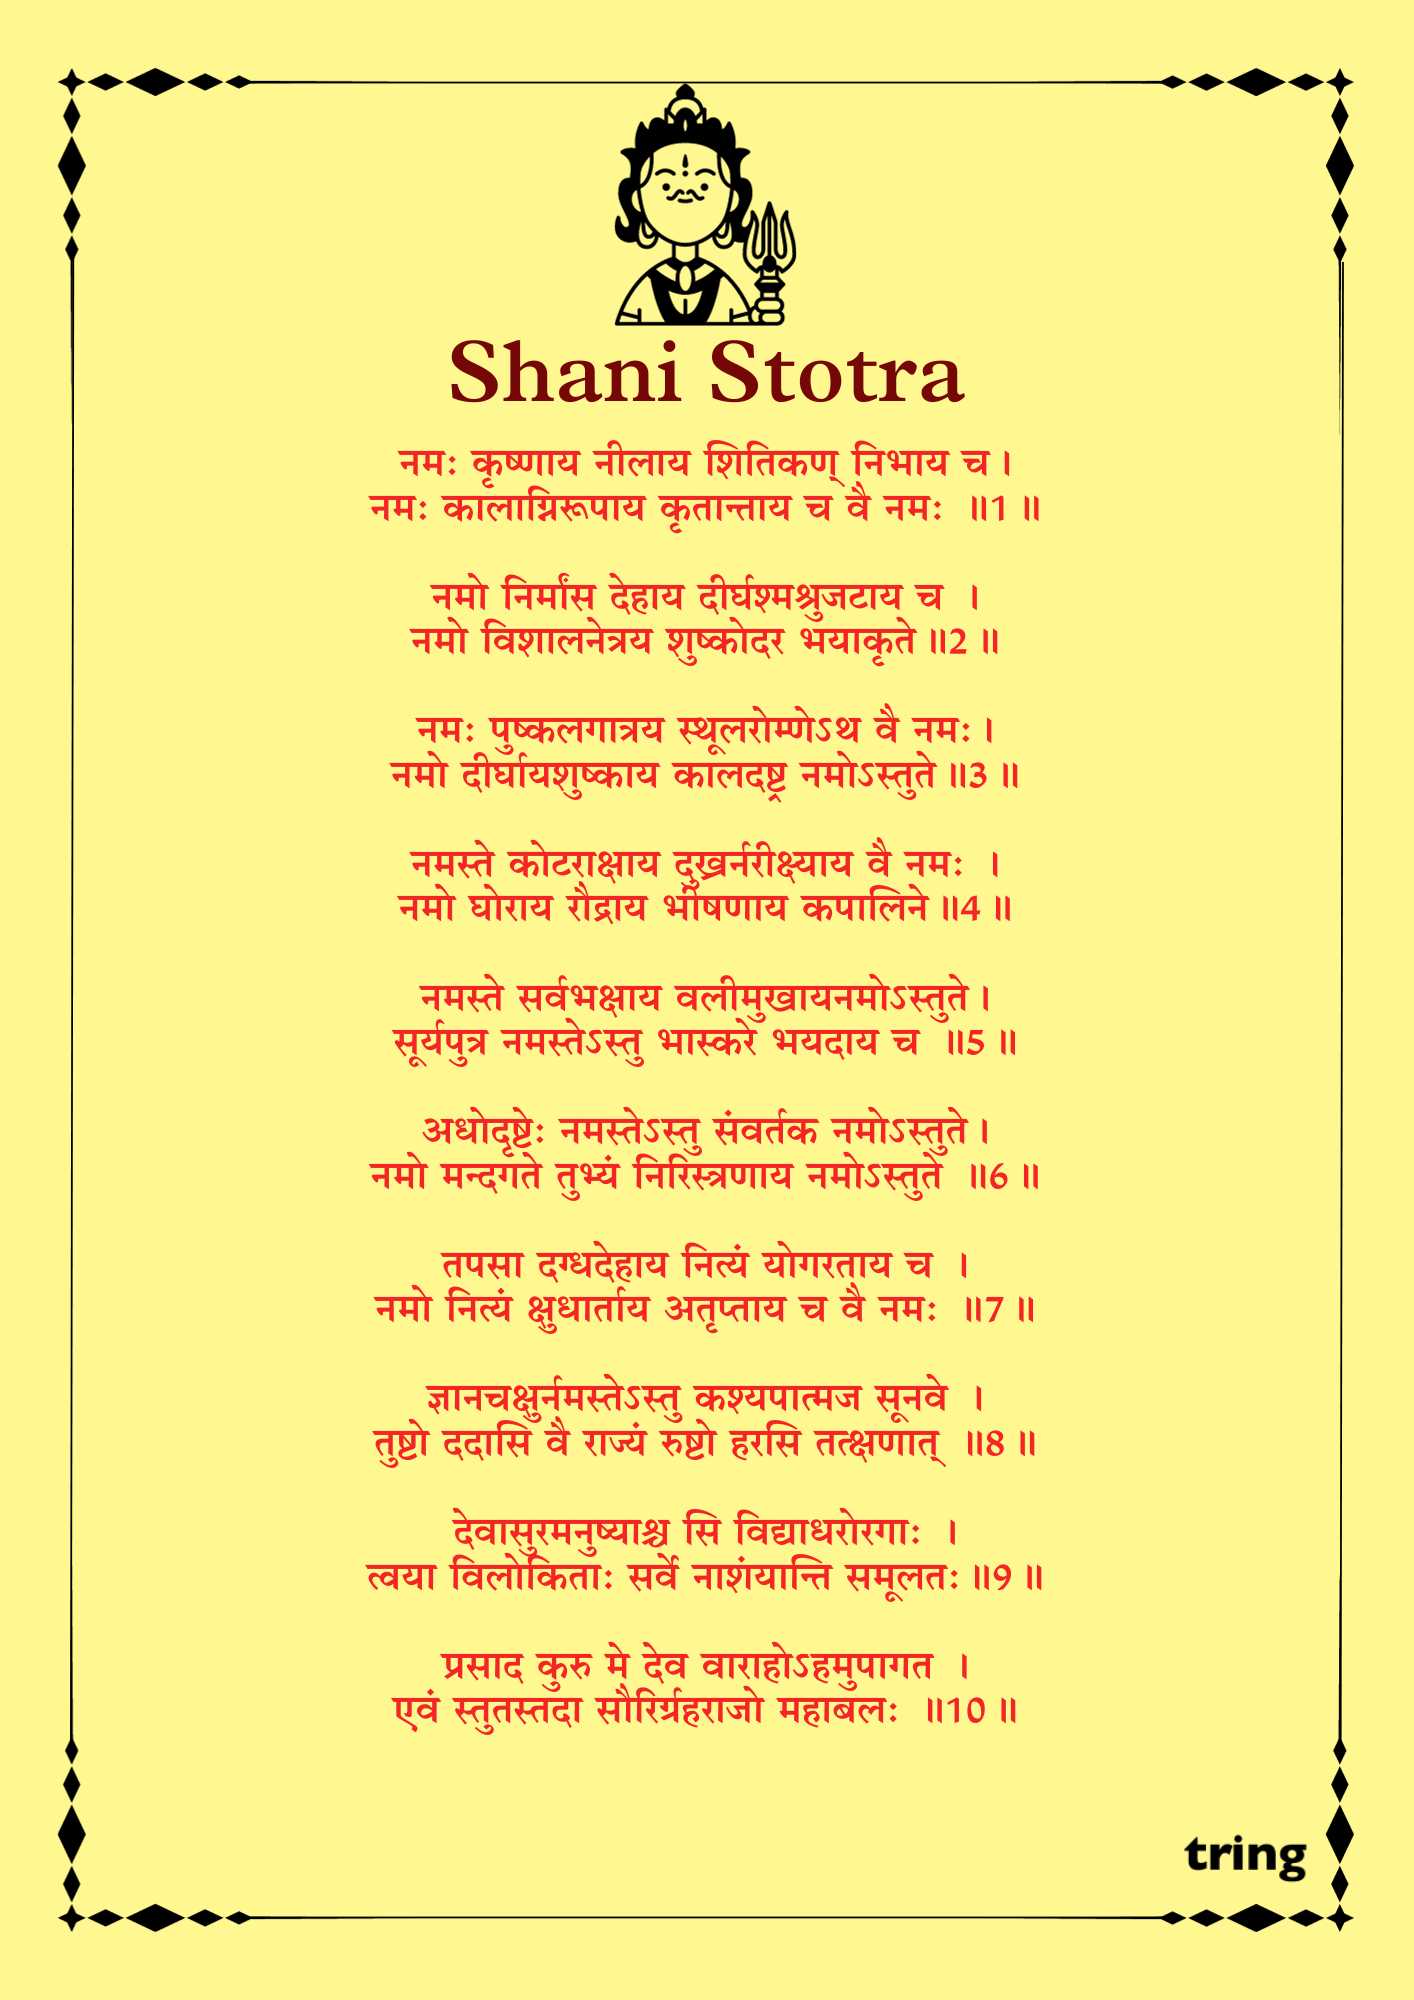 Shani Stotra Images